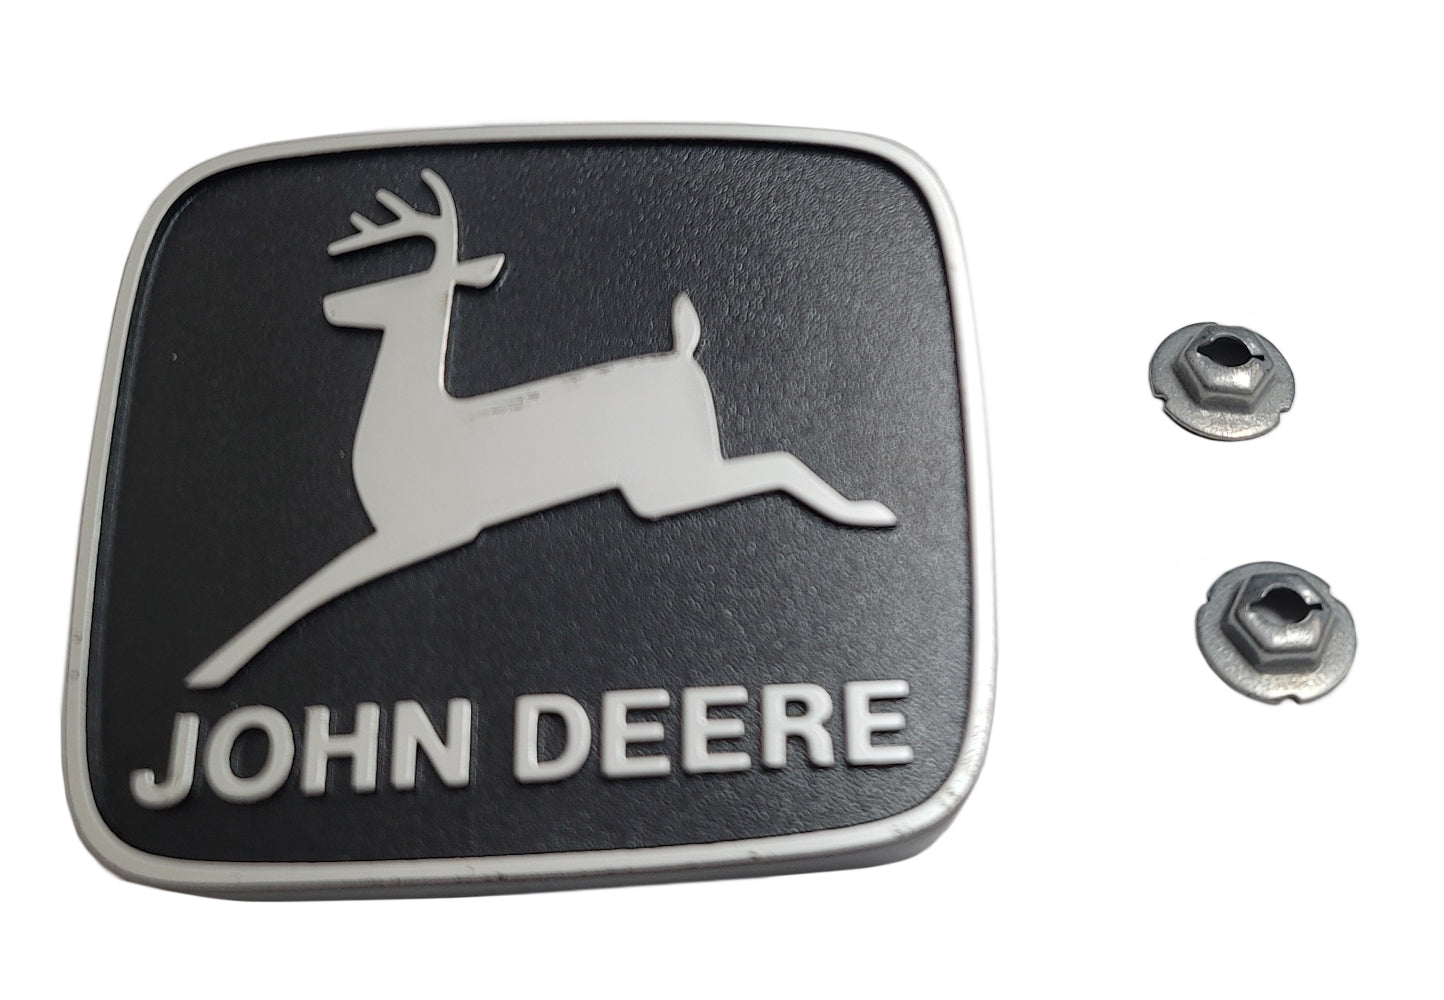 John Deere Original Equipment Medallion with Nuts- M76645A